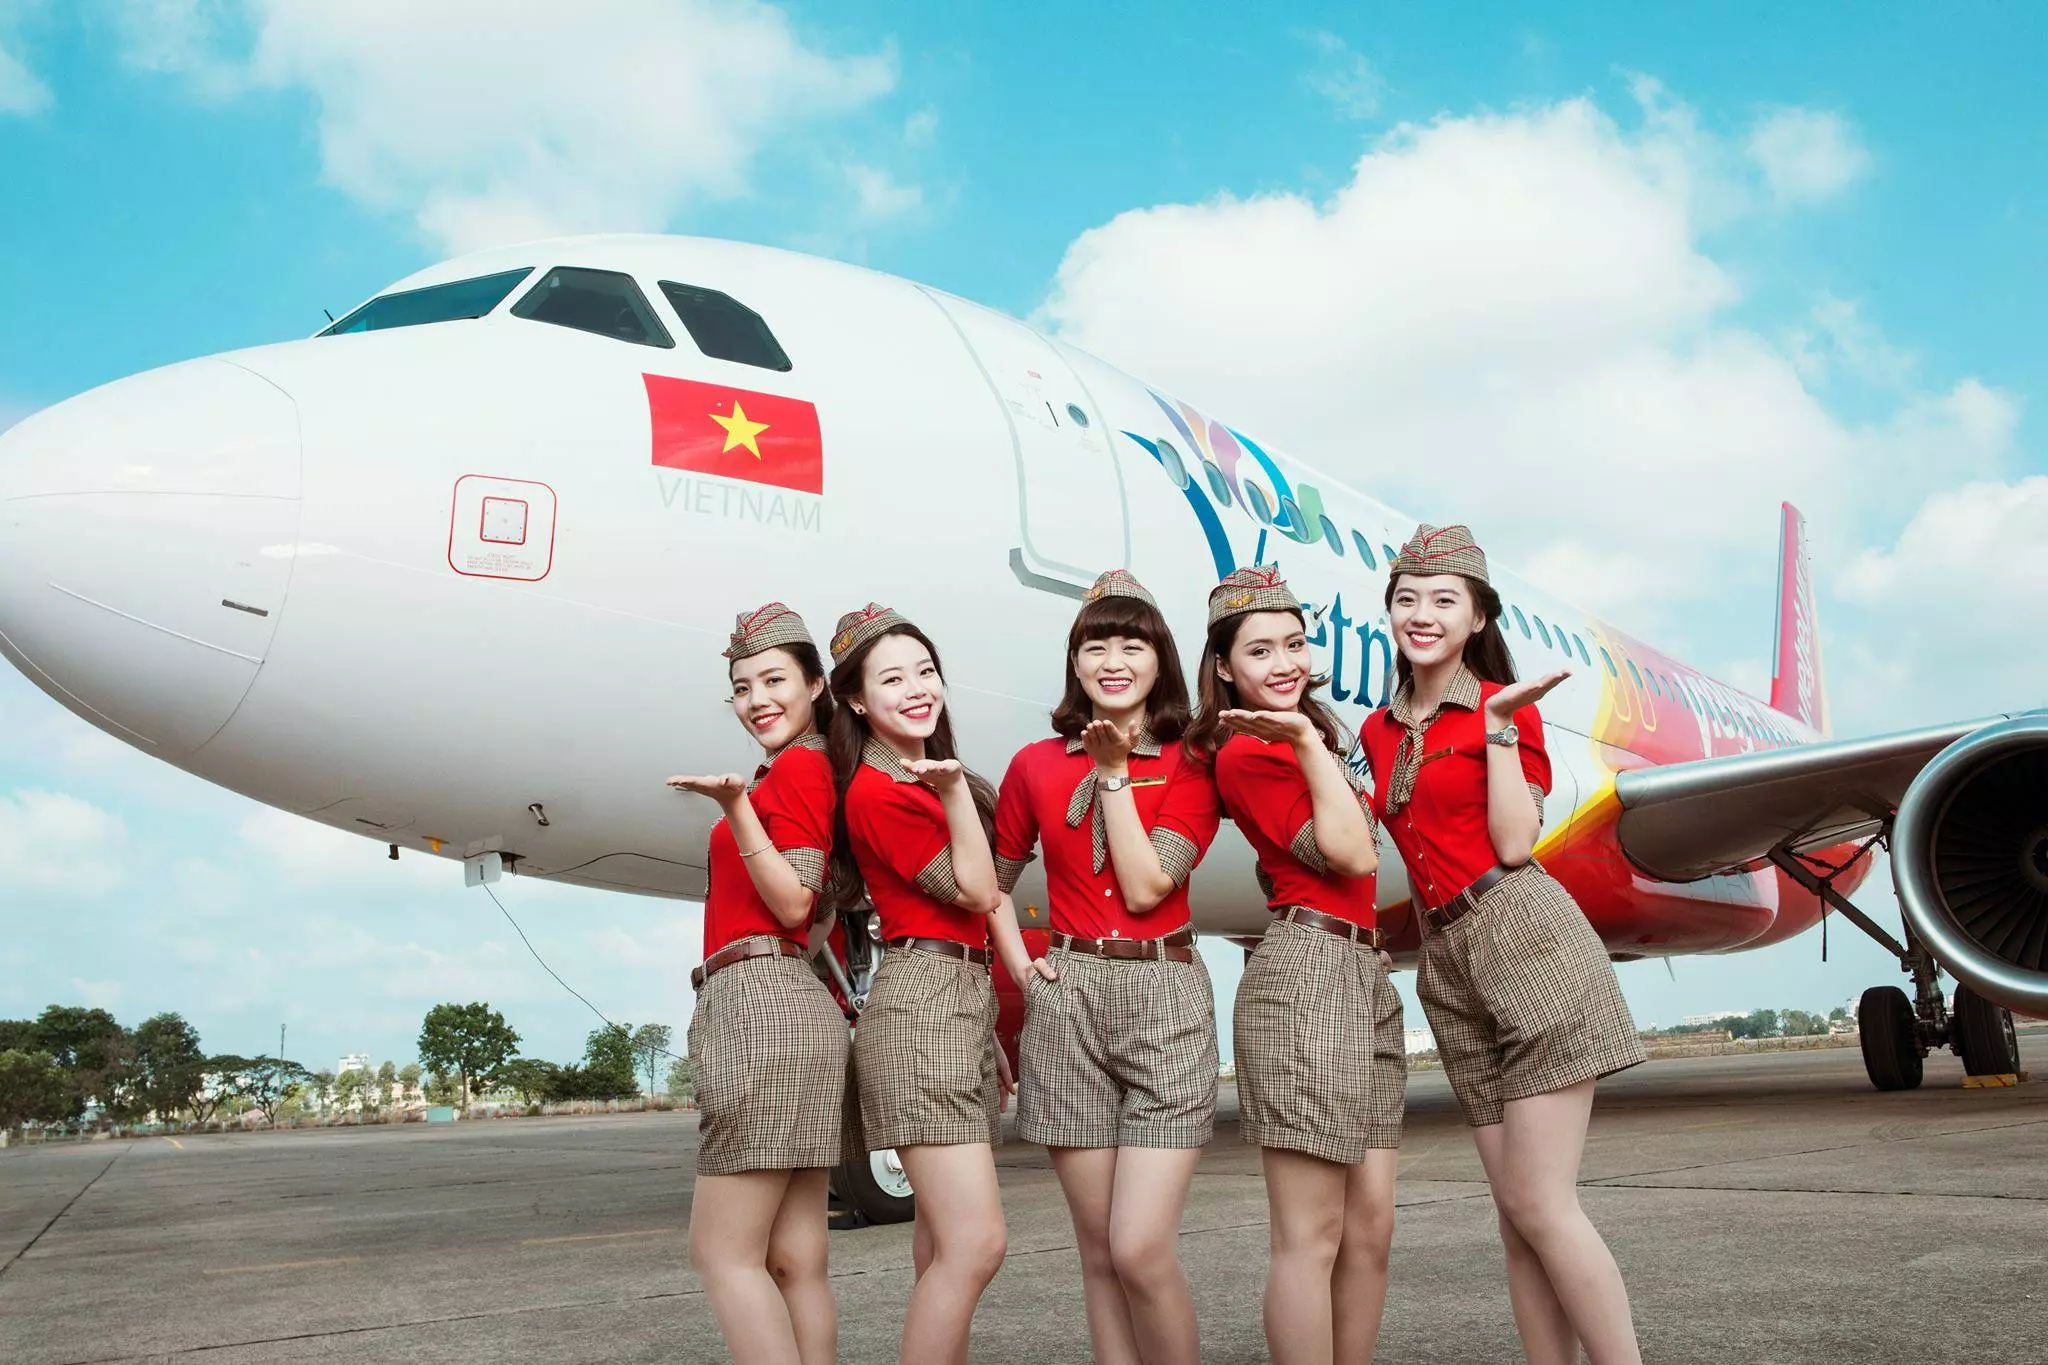 О «вьетнамских авиалиниях»